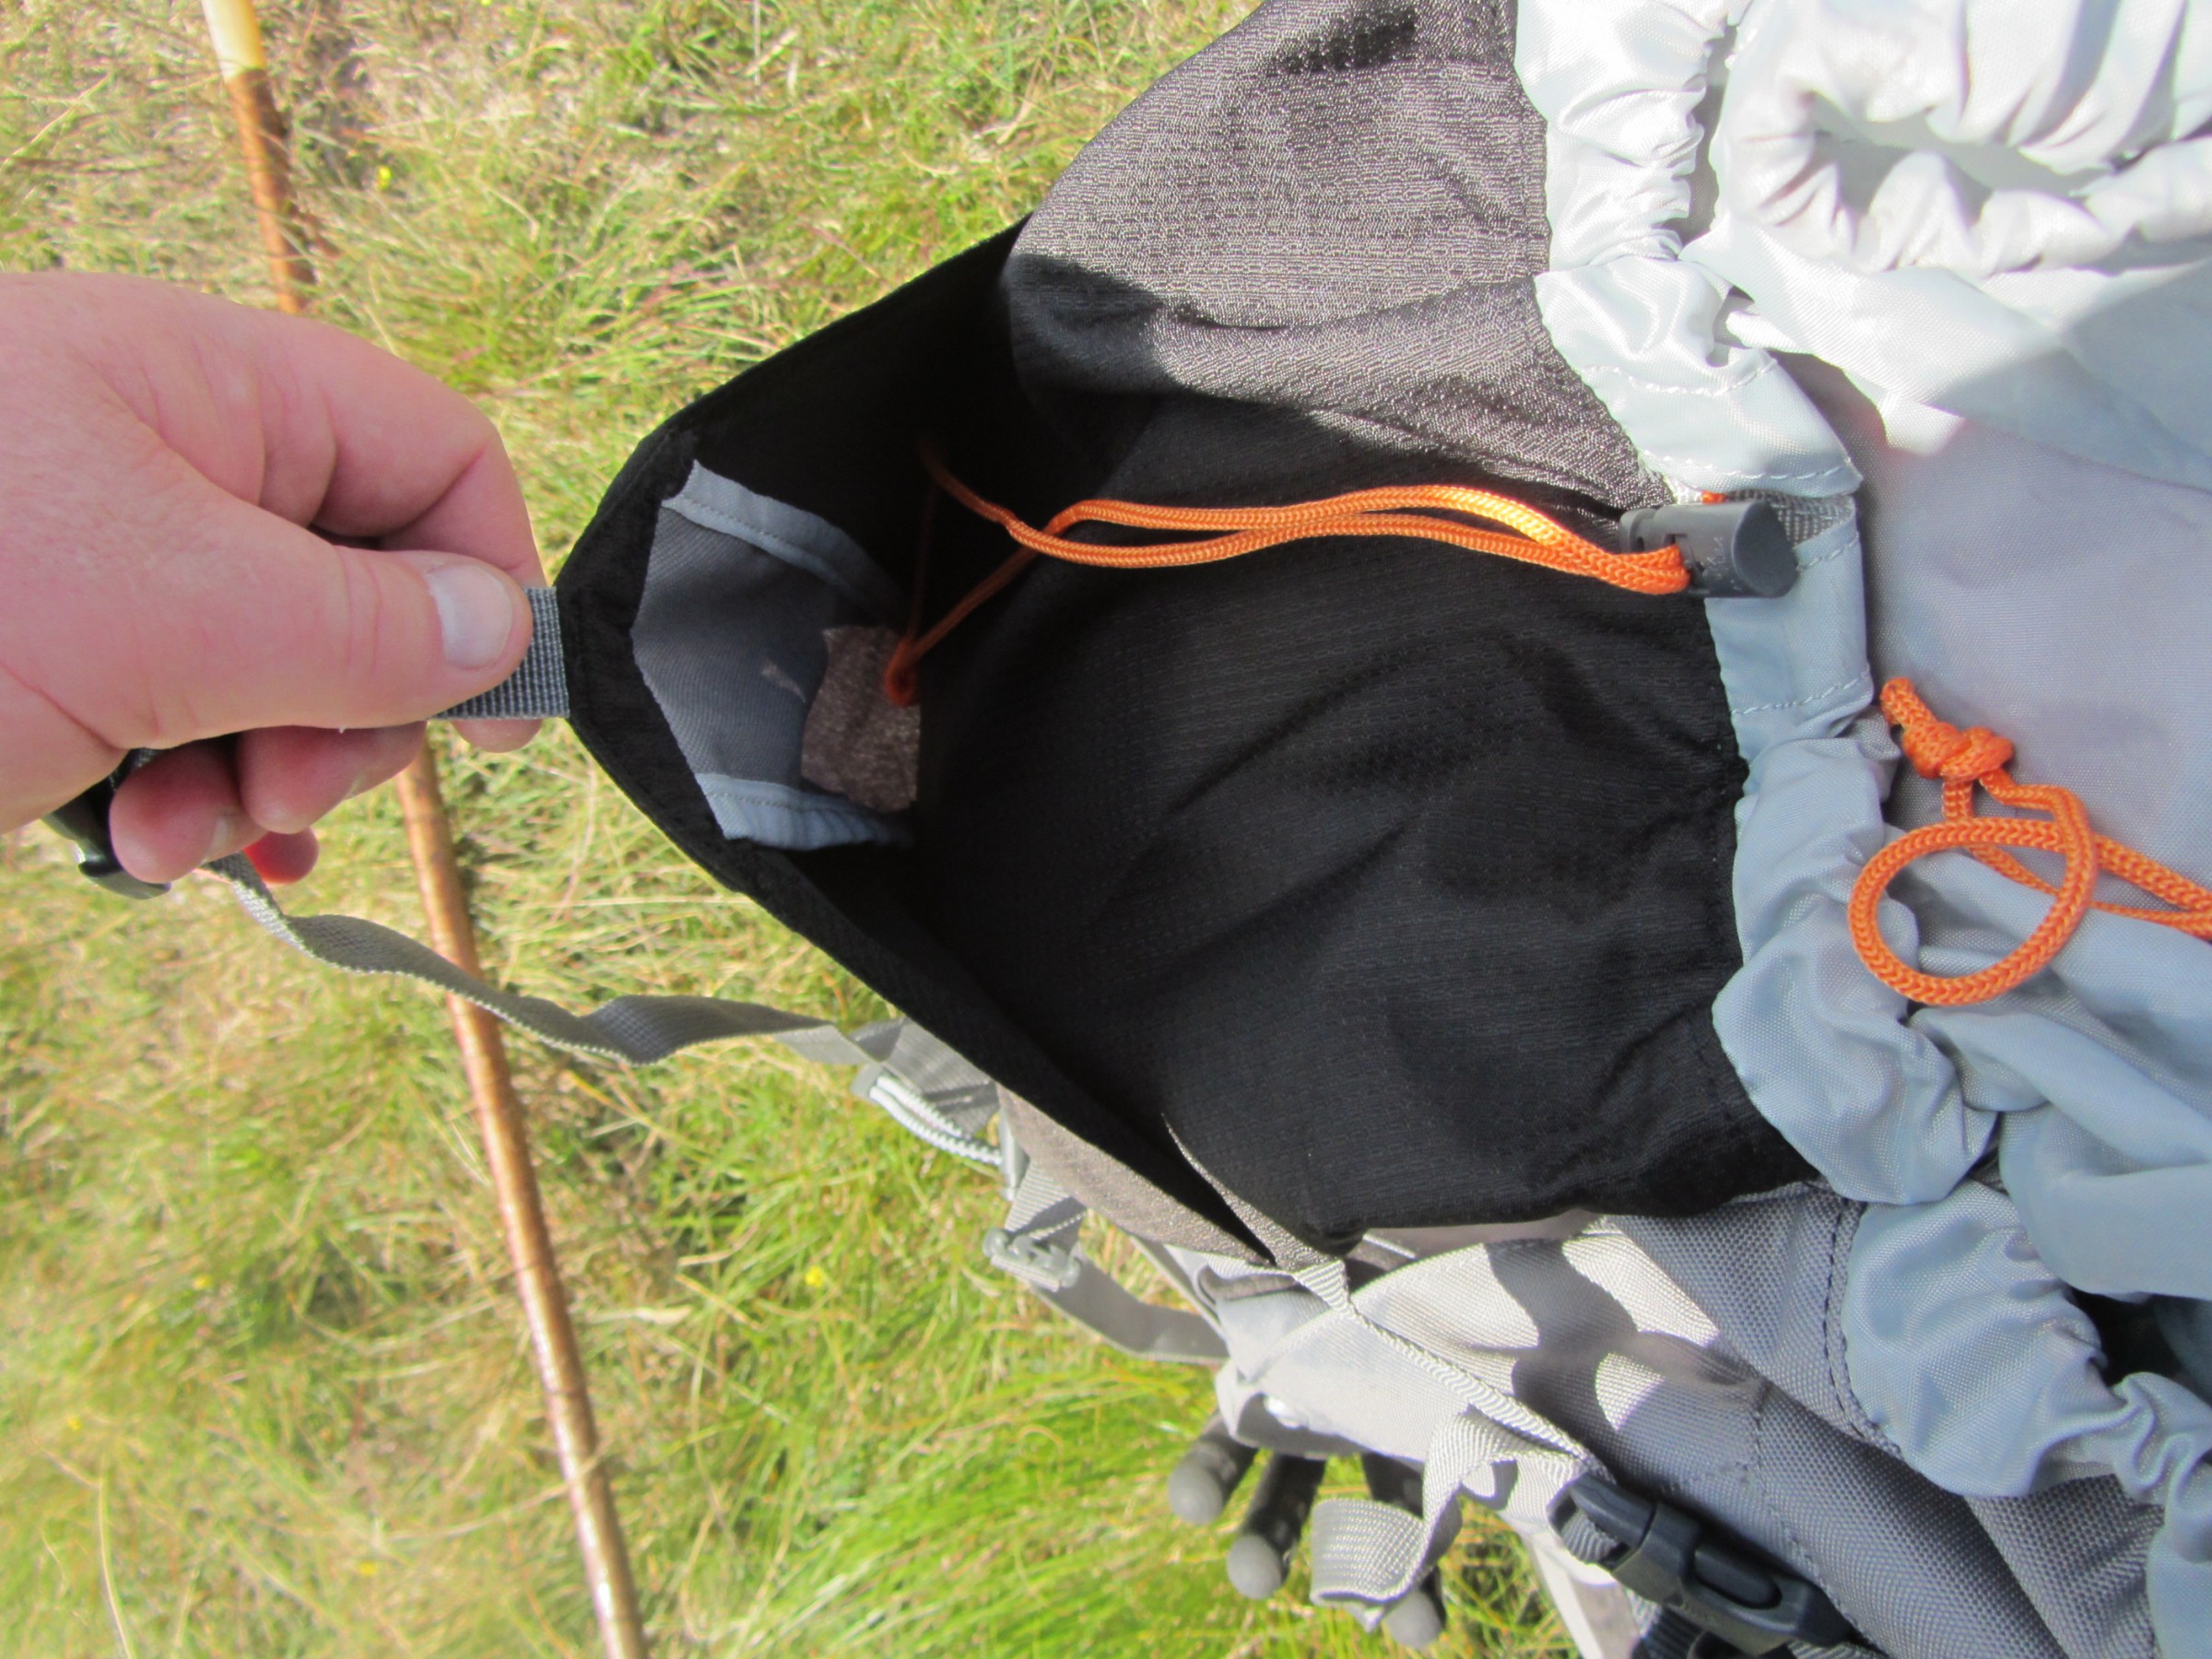 Vango Contour 60 + 10 litre rucksack review – HikersBlog